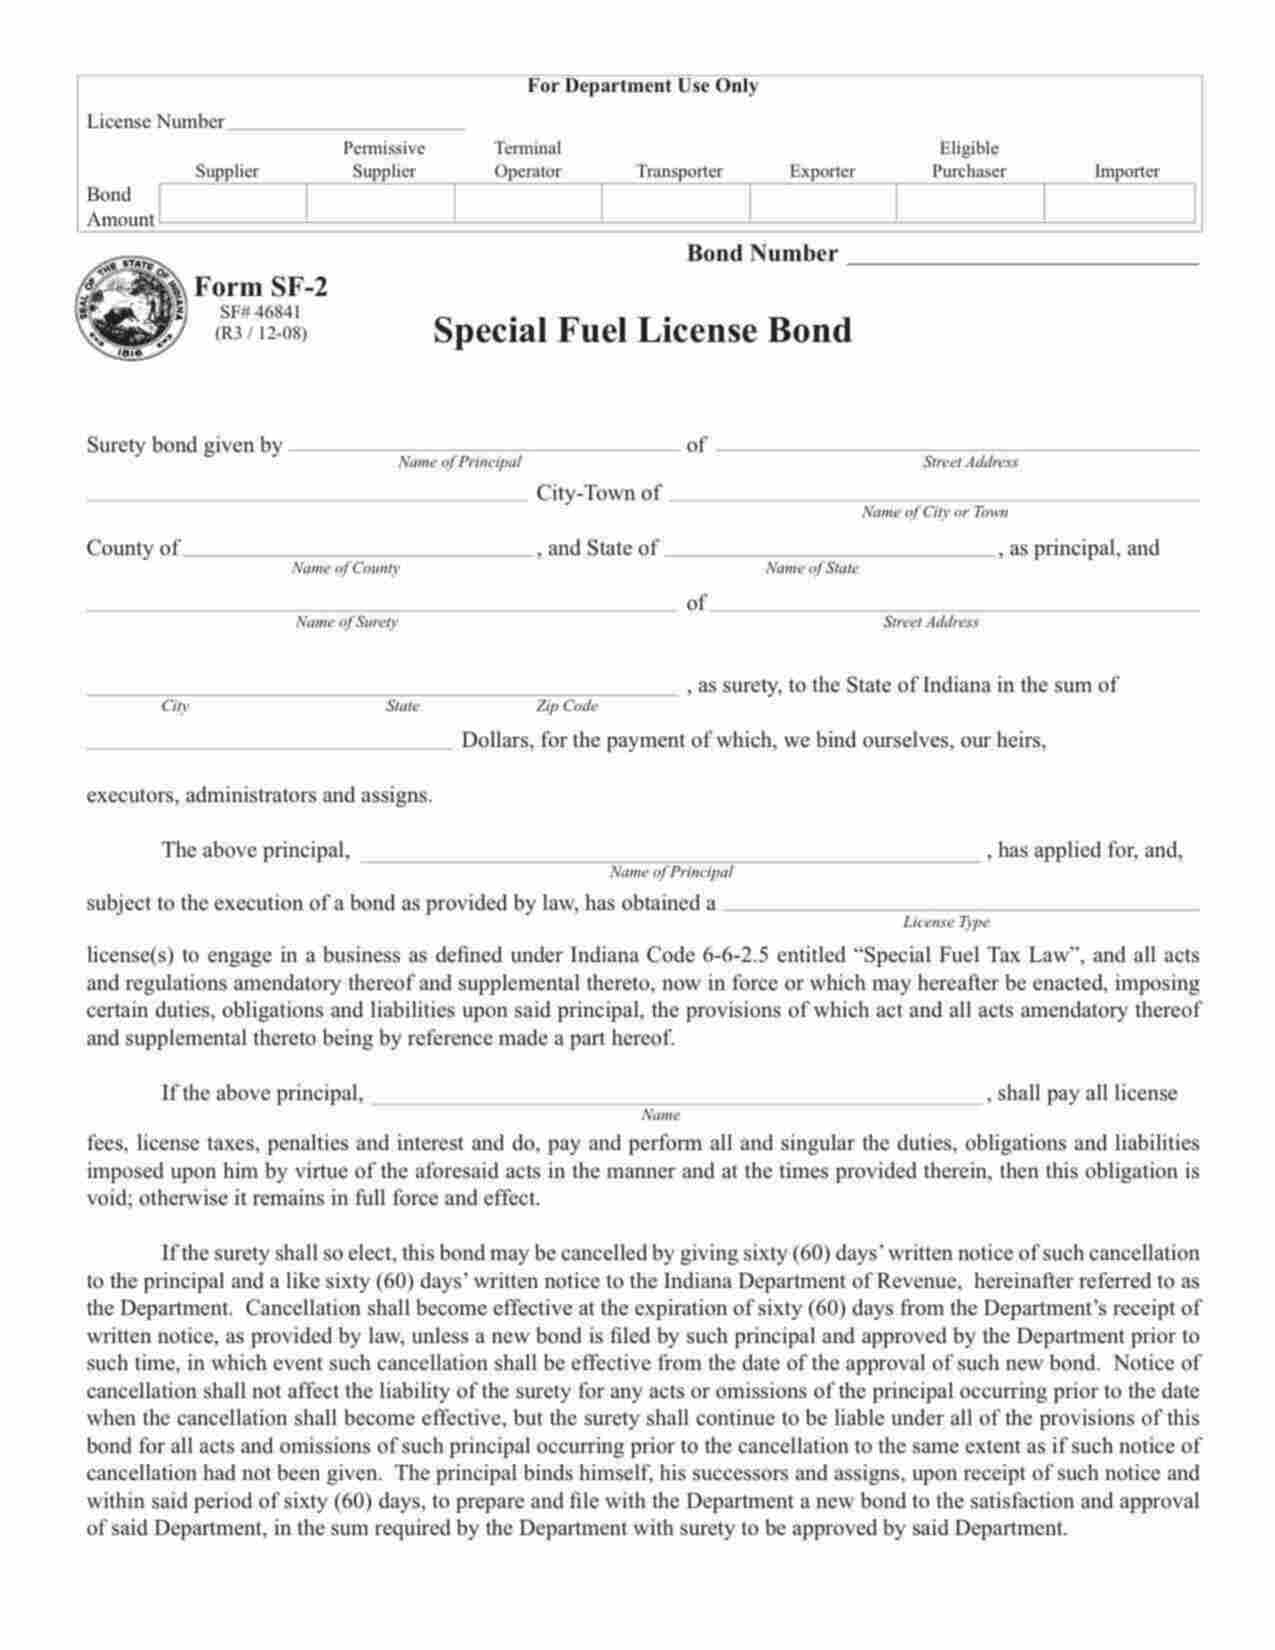 Indiana Special Fuel License - Permissive Supplier Bond Form